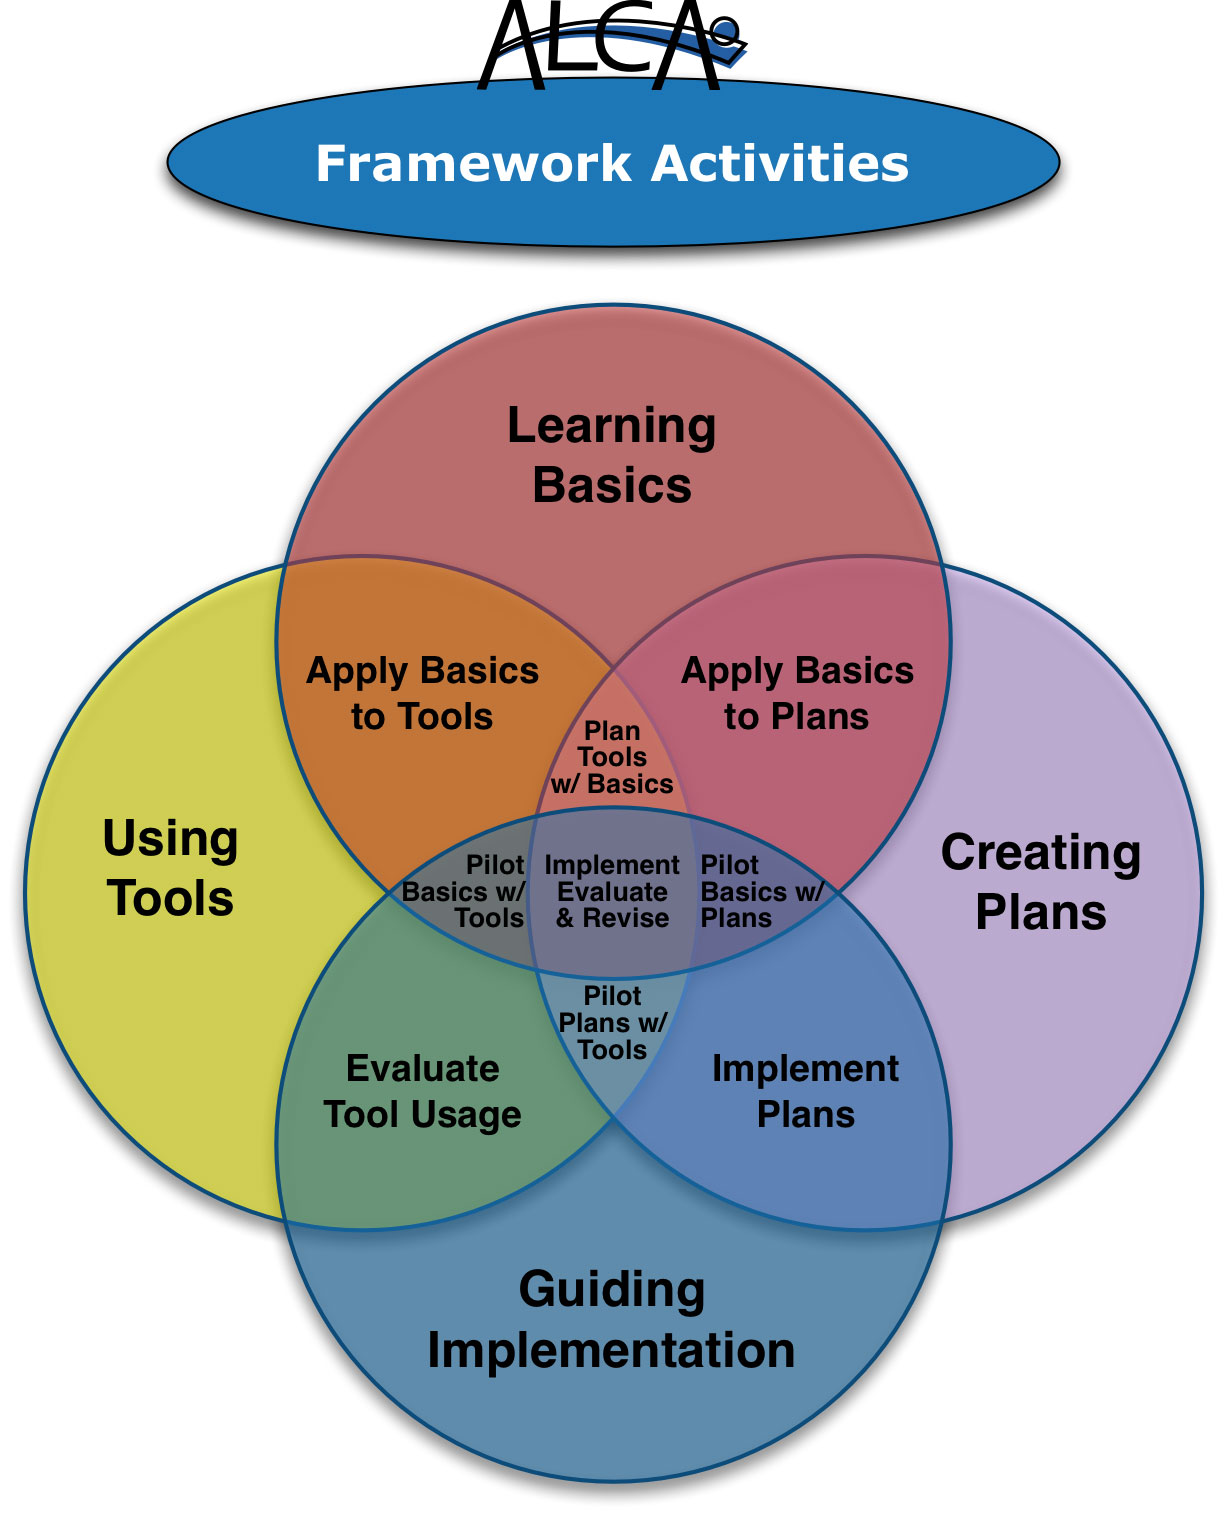 ALCA Framework Activities Circle Venn Diagram